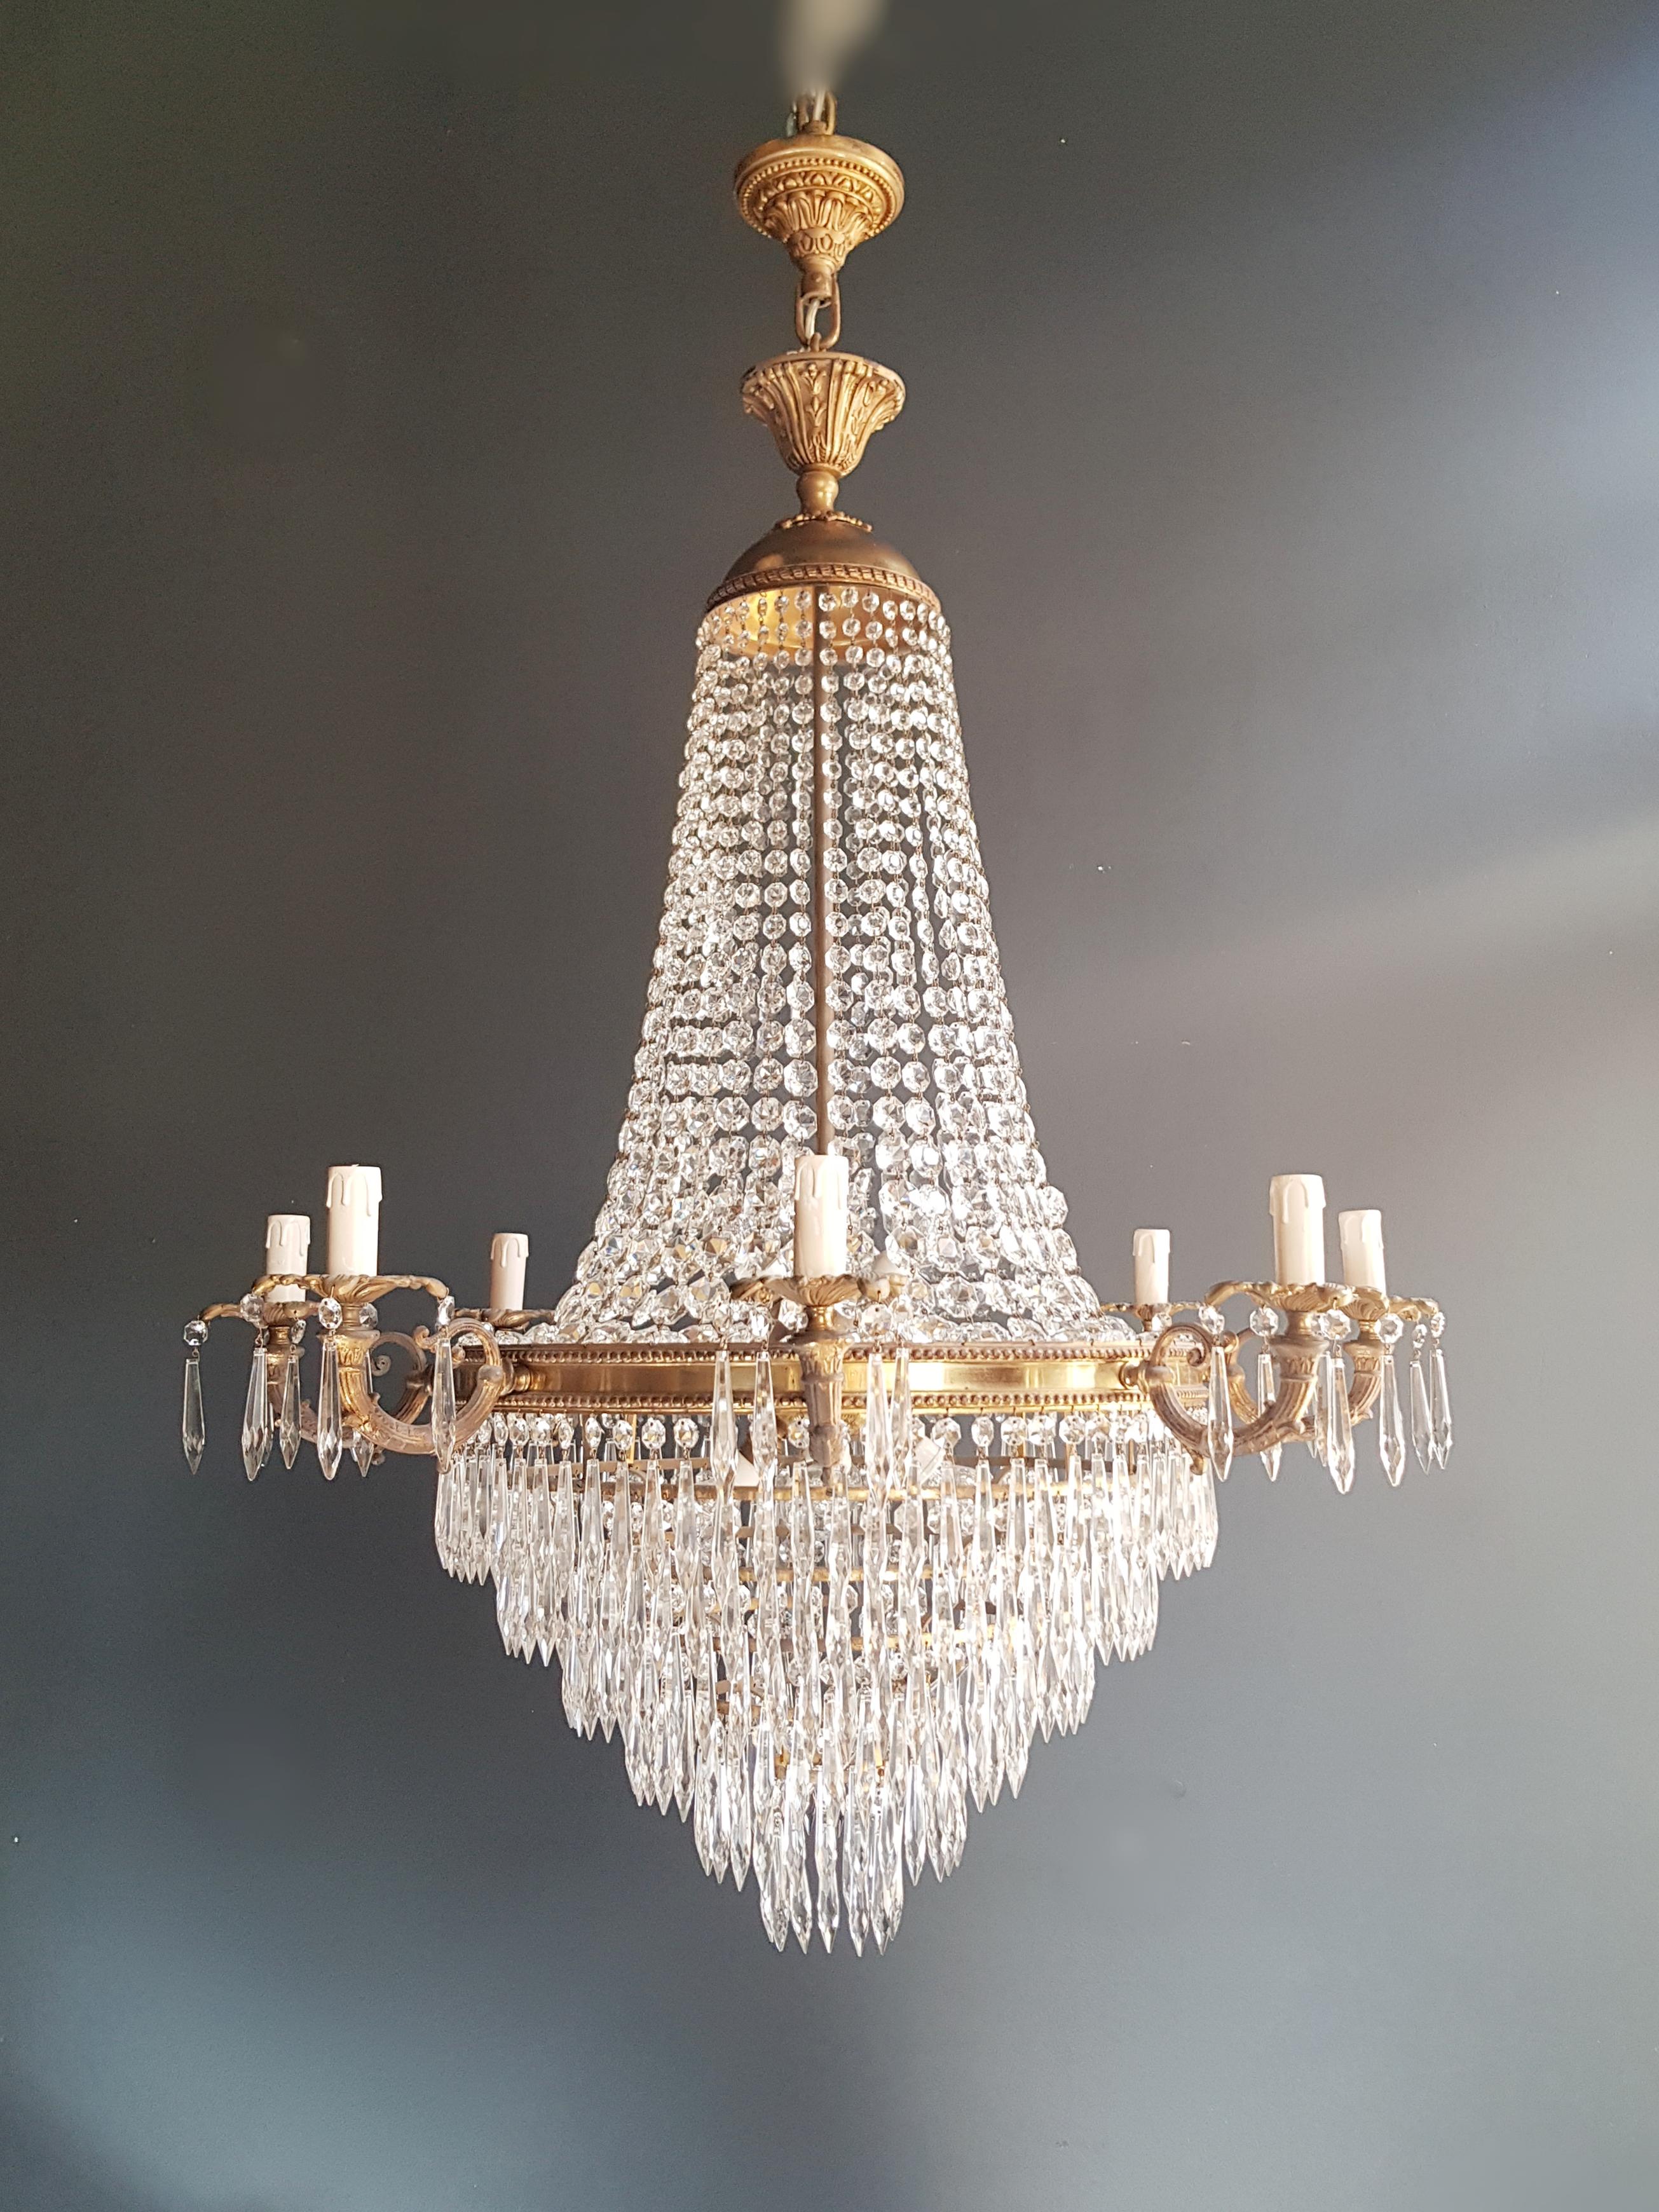 Montgolfiè Empire Sac a Pearl Chandelier Crystal Lustre Ceiling Lamp Antique 6